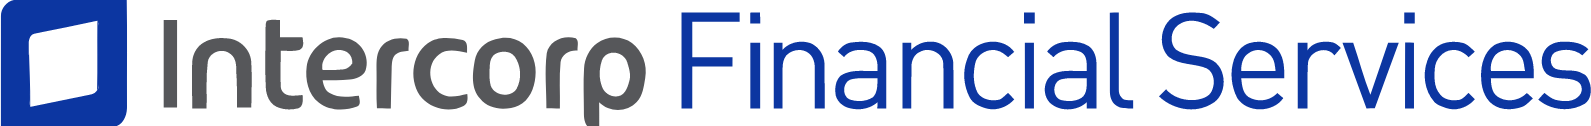 Intercorp Financial Services logo large (transparent PNG)